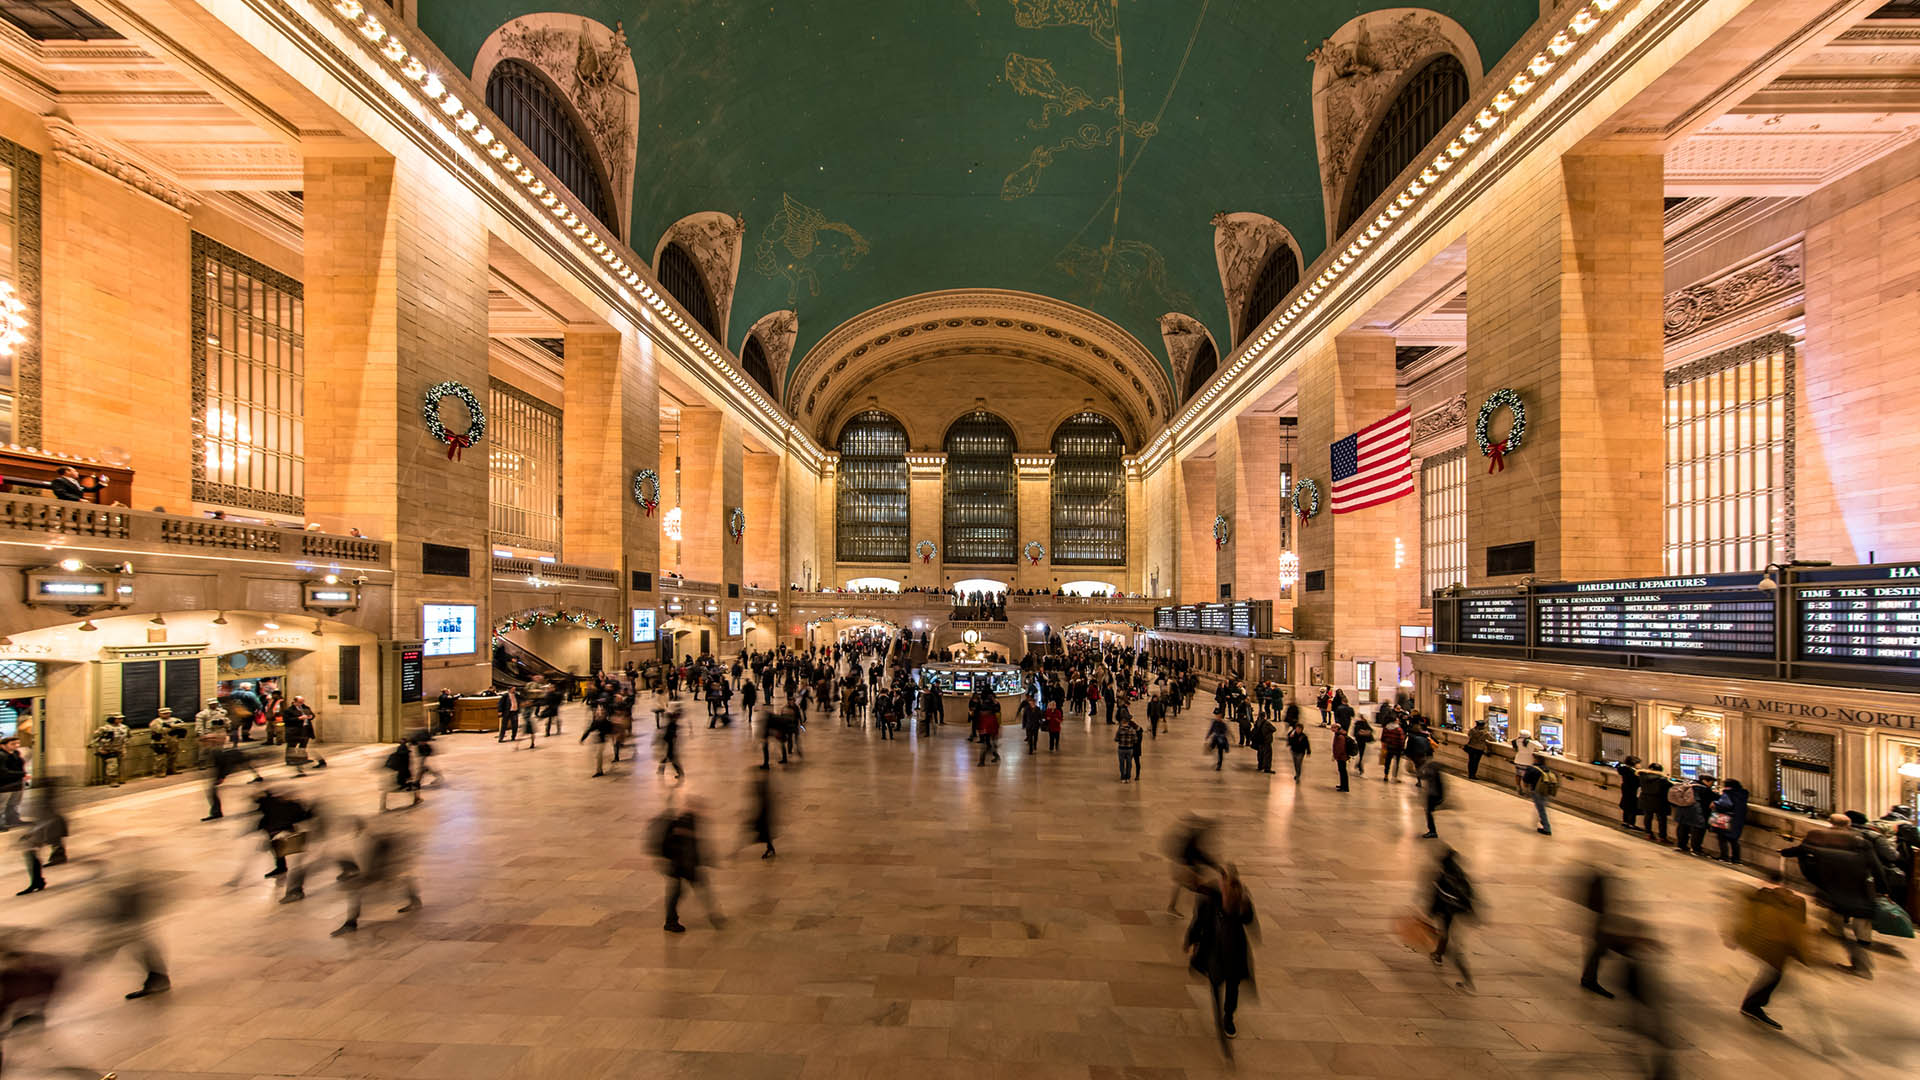 Foyer of Grand Central Station, Manhattan, New York City